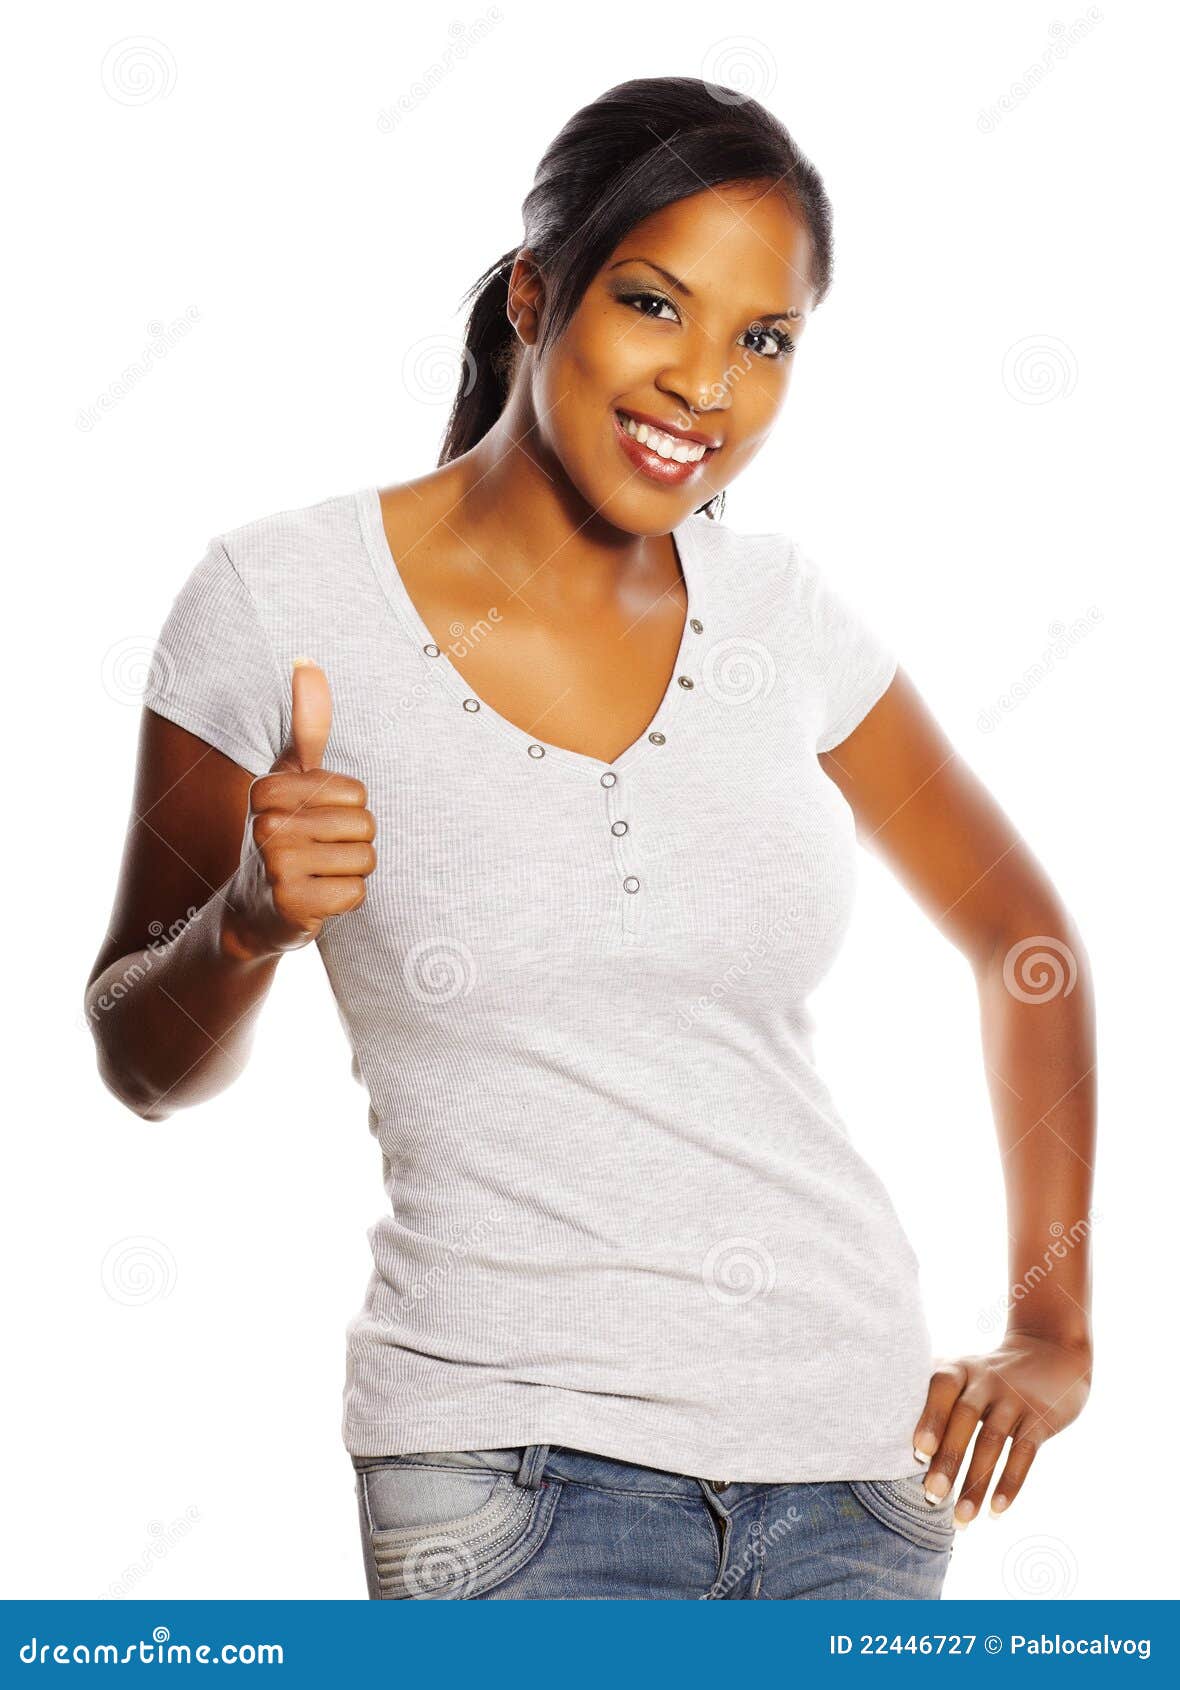 https://thumbs.dreamstime.com/z/happy-black-woman-22446727.jpg